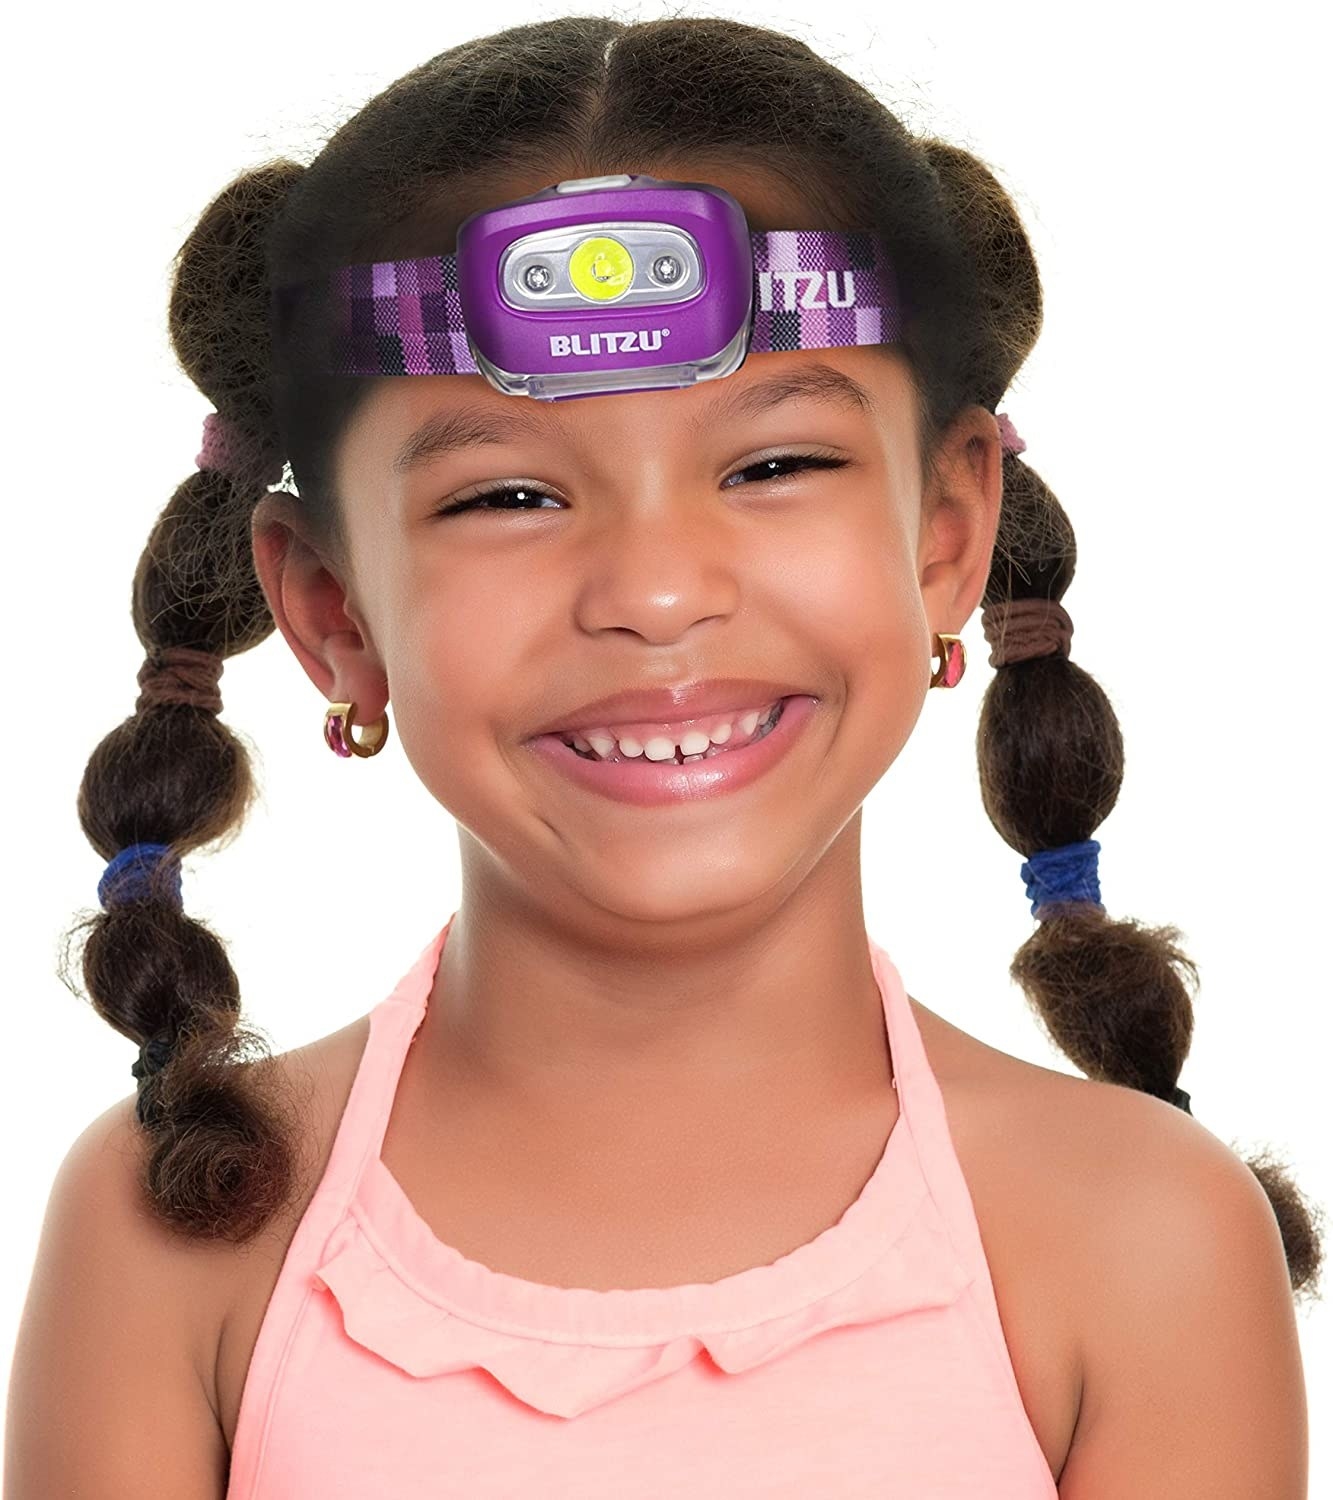 A child wearing a headlamp